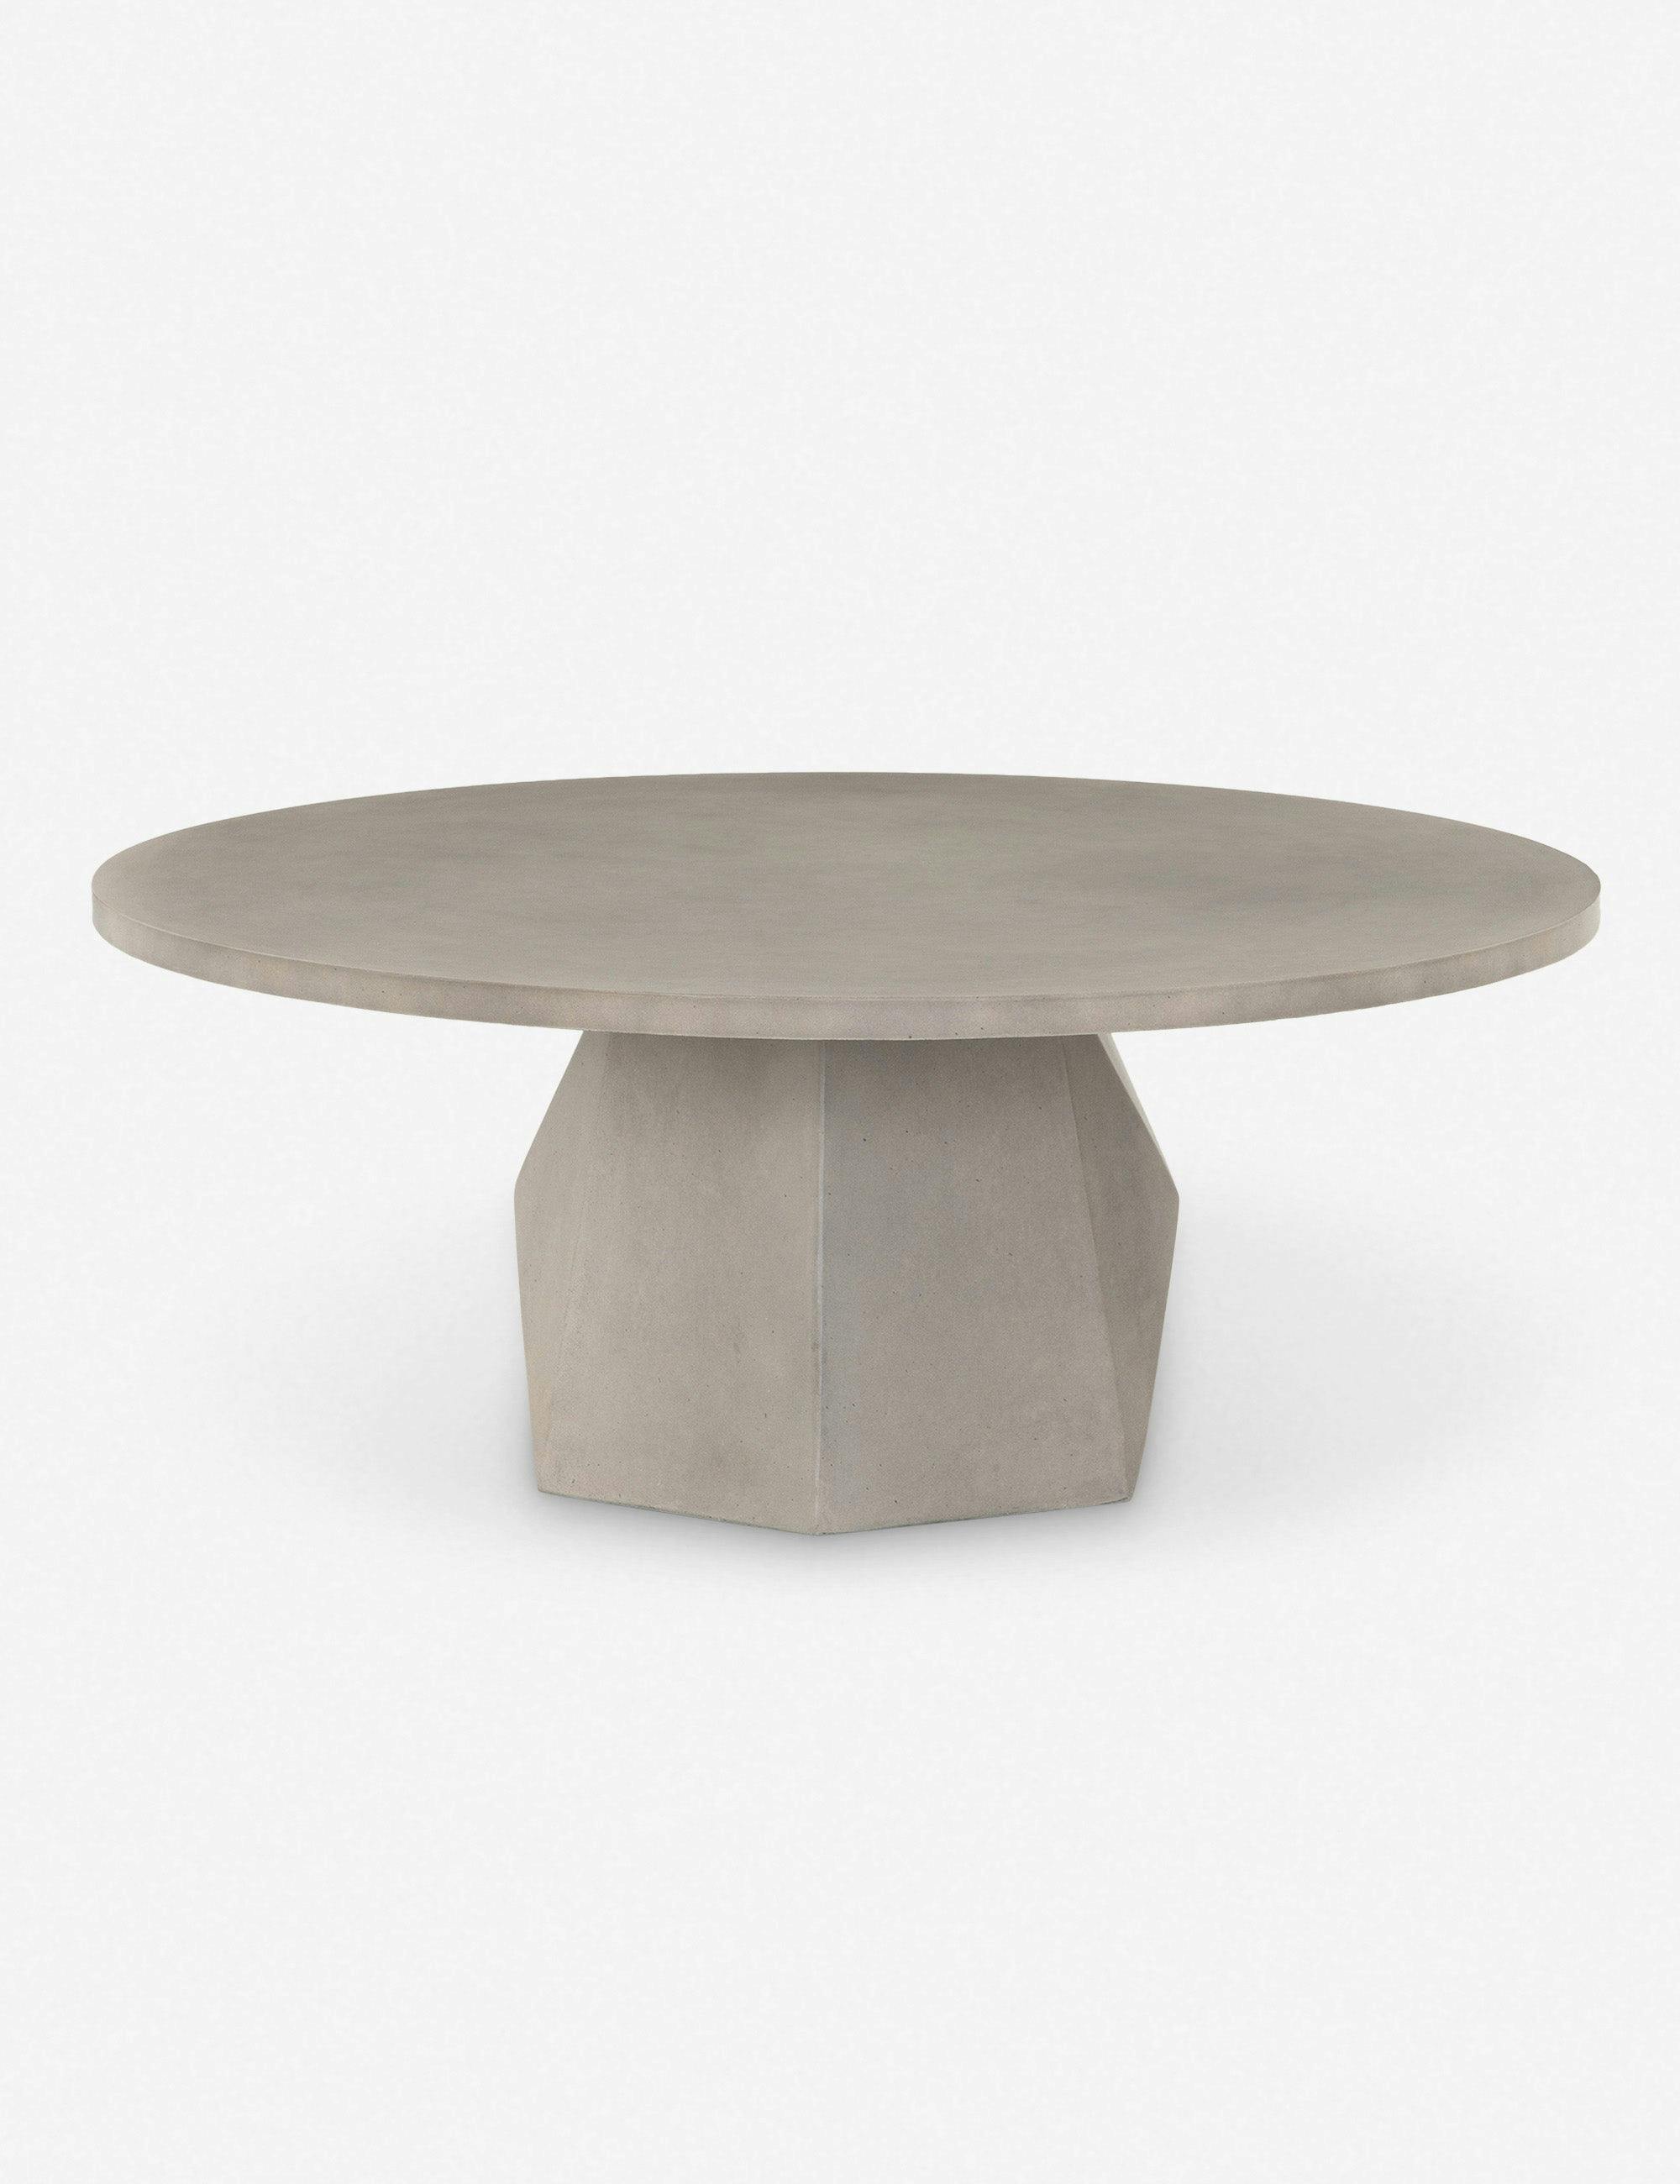 Schuller Indoor / Outdoor Round Coffee Table - Gray